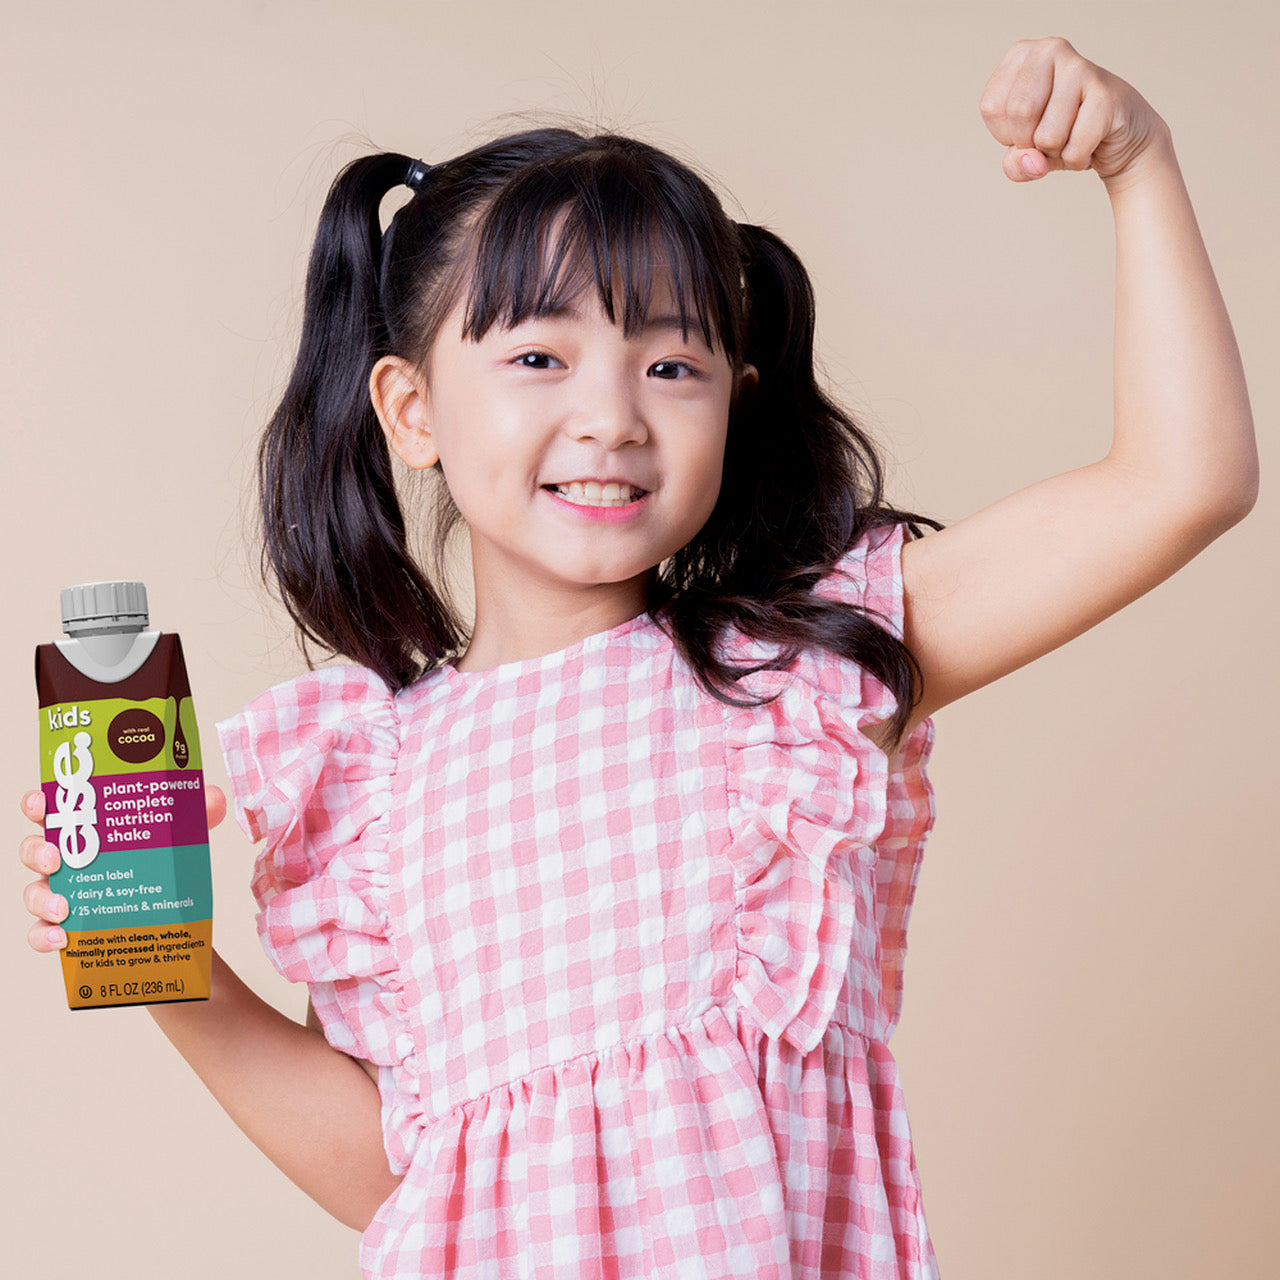 girls drinking kids protein shake